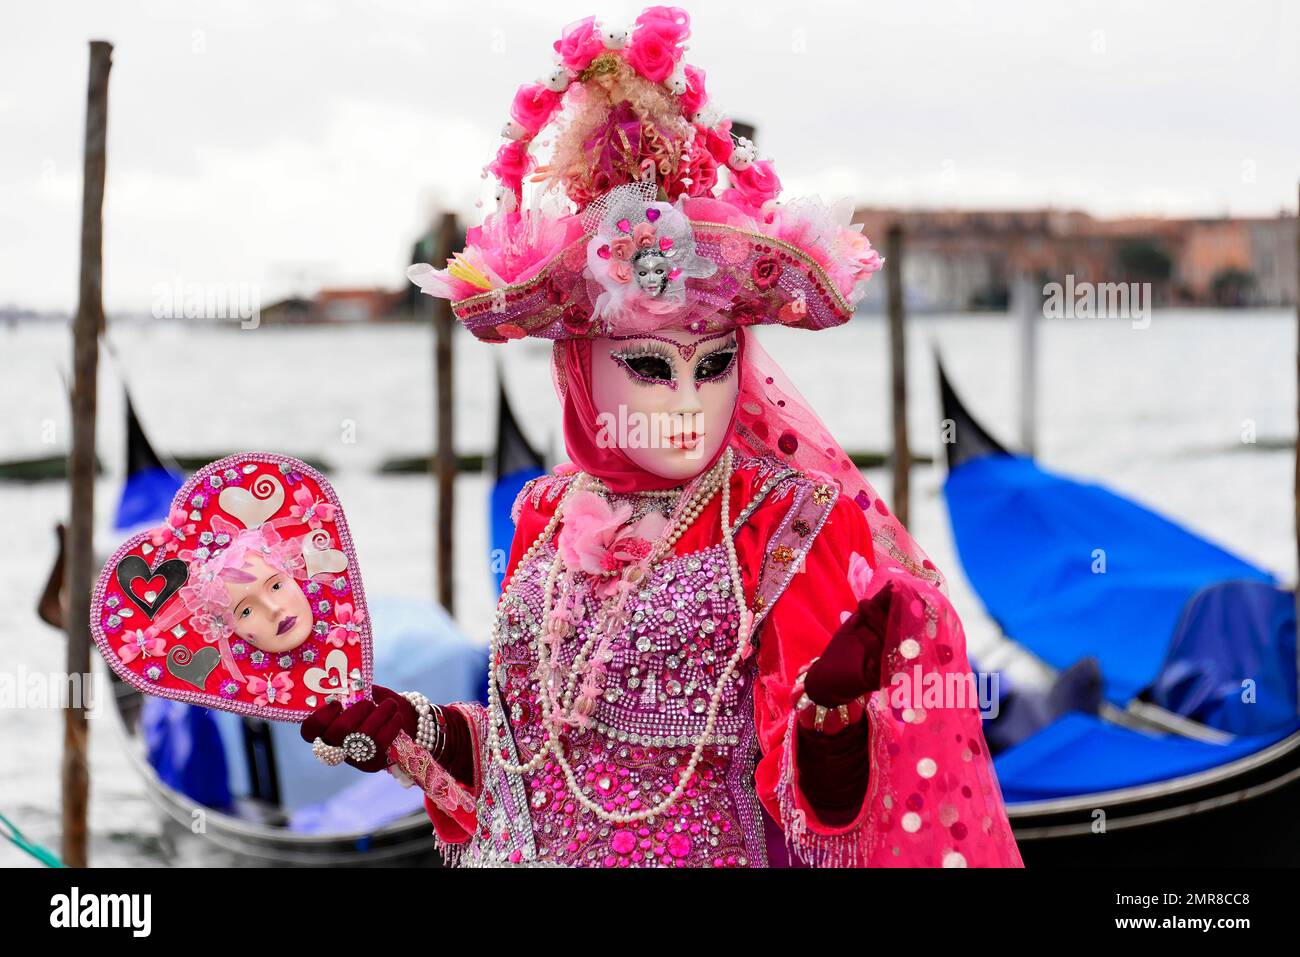 Frau in Kostüm mit Maske, carnevale, Karneval in Venedig, Venetien,  Italien, Europa Stockfotografie - Alamy